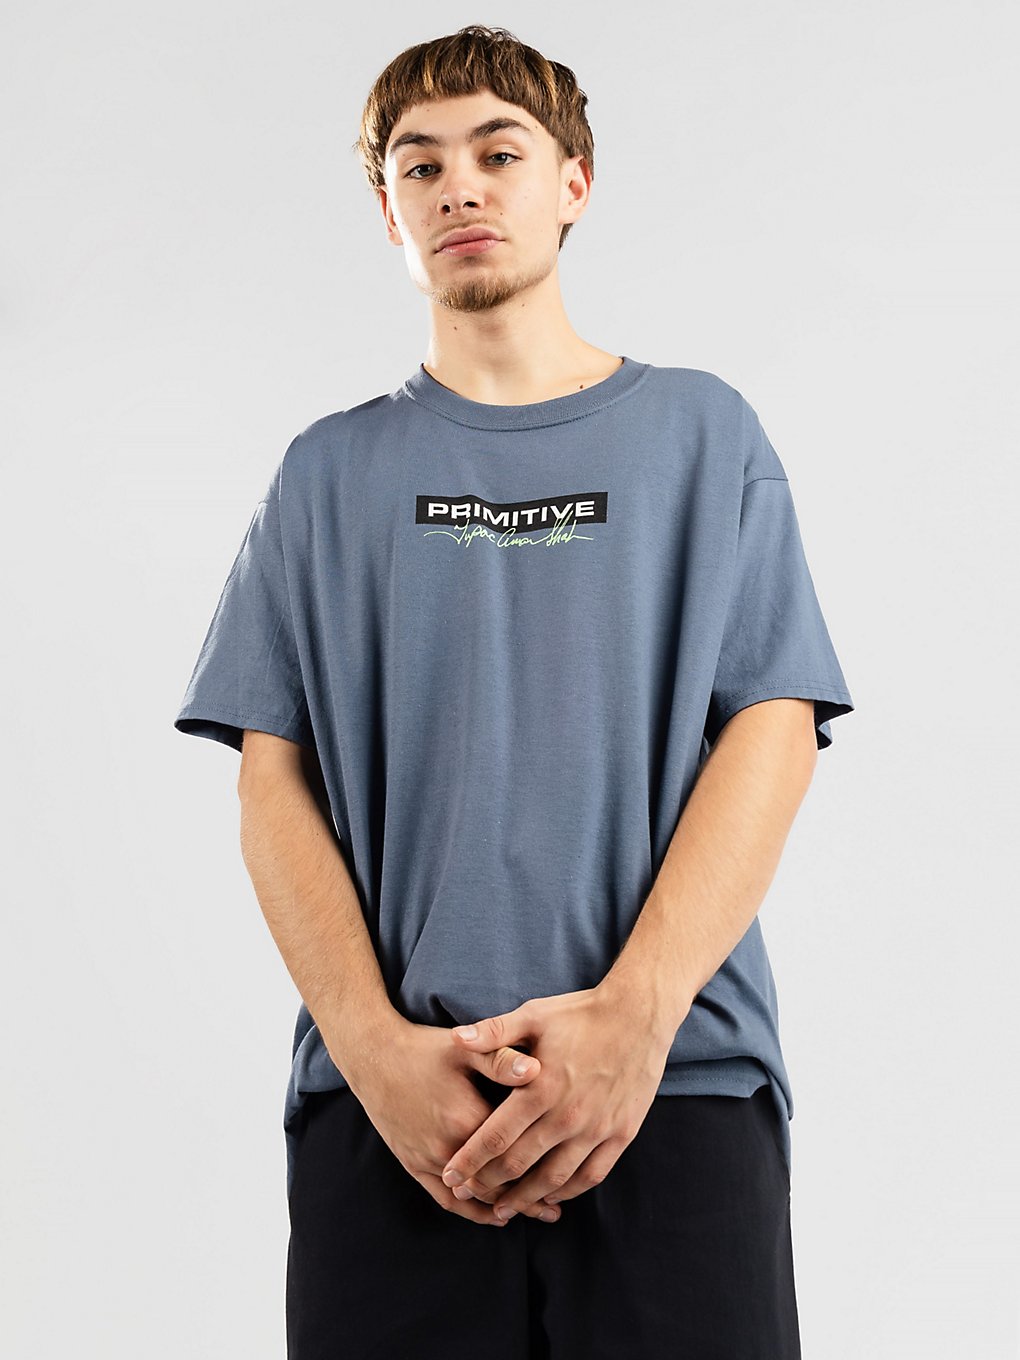 Primitive X Tupac Shadows T-Shirt slate kaufen